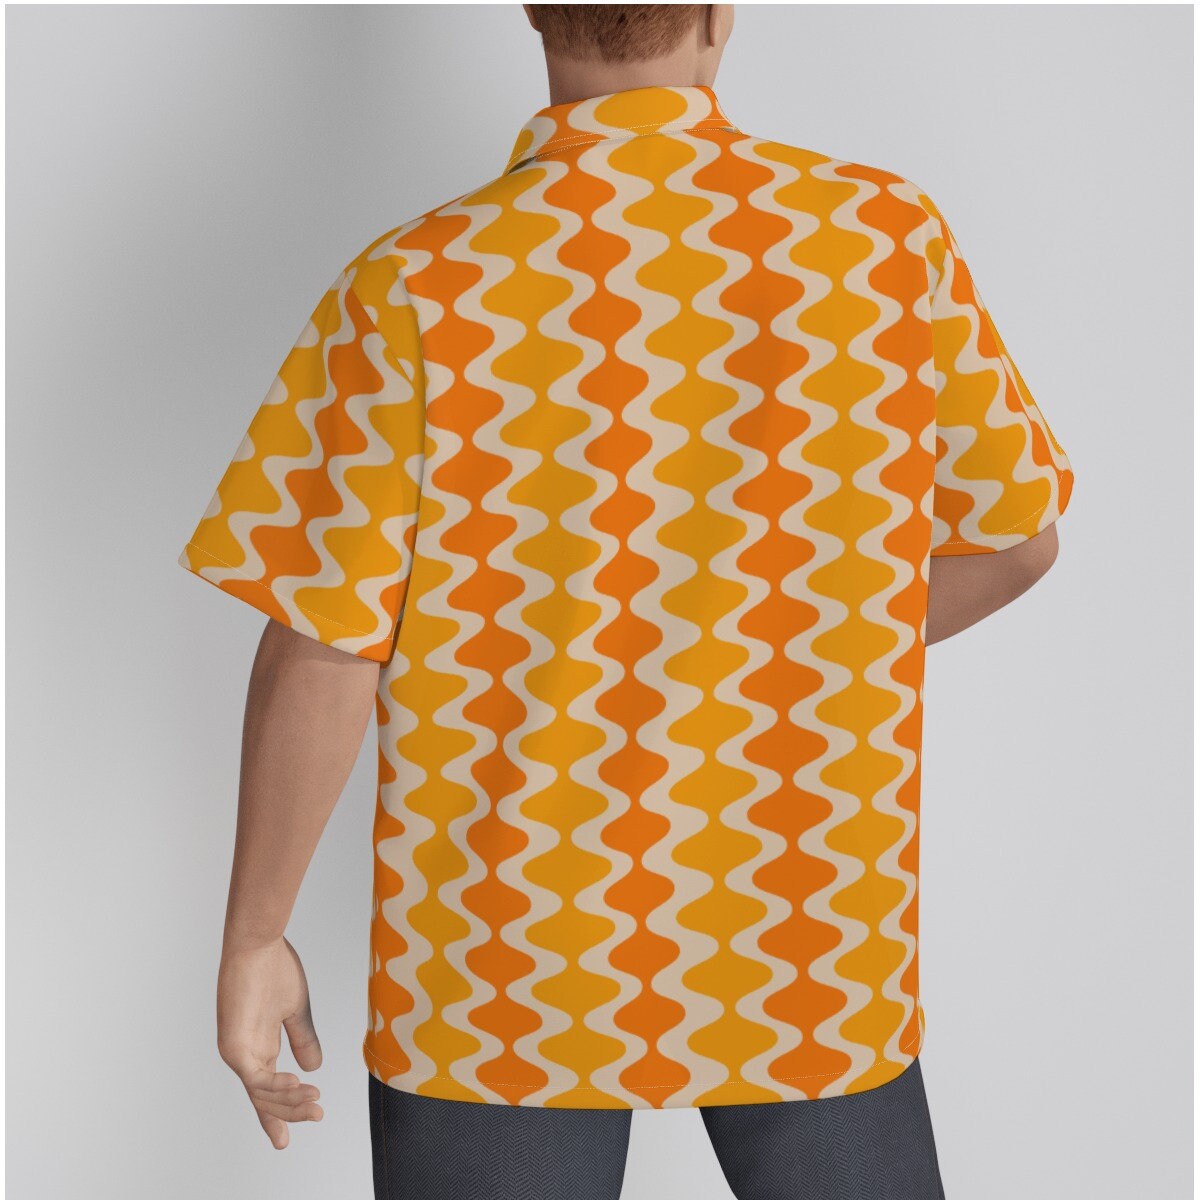 Retro Shirt Men, Retro Top, Mid Century Style Top, 60s 70s style shirt, Vintage Style Top, Yellow Orange Shirt, Hawaiian Shirt, Dress Shirt